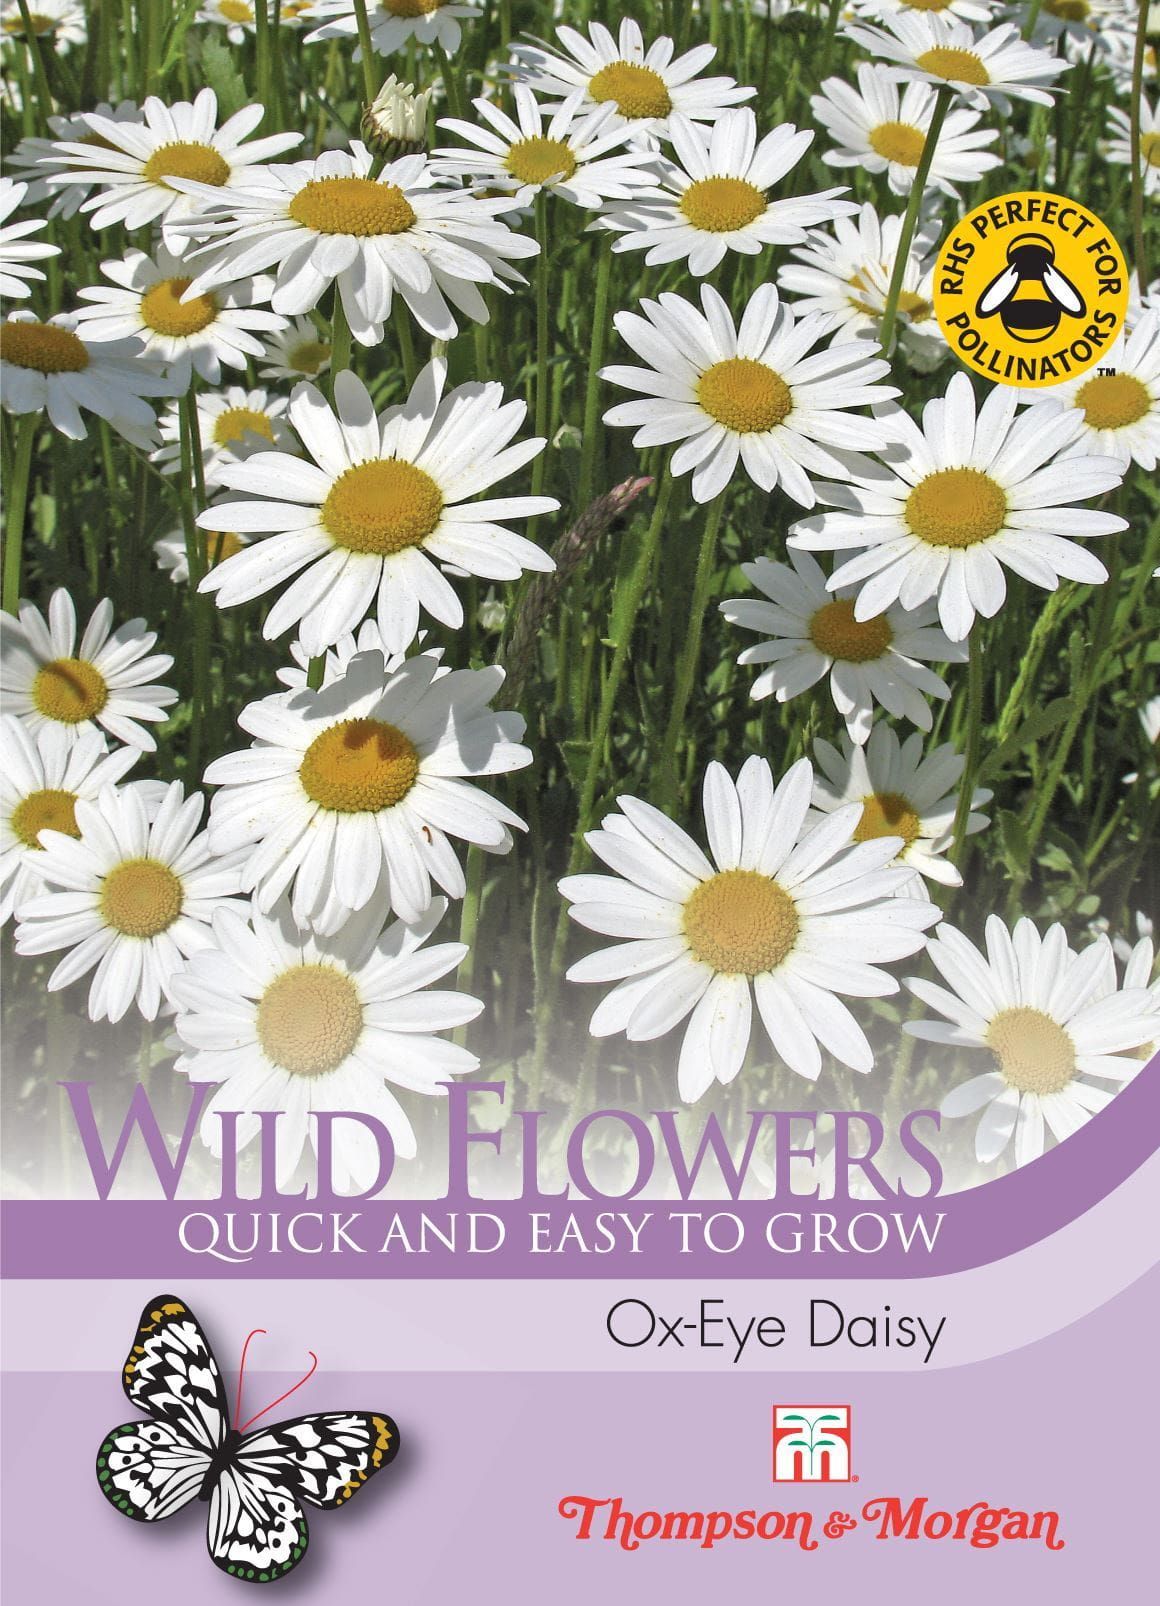 Thompson & Morgan Wild Flower Oxeye Daisy 600 Seed